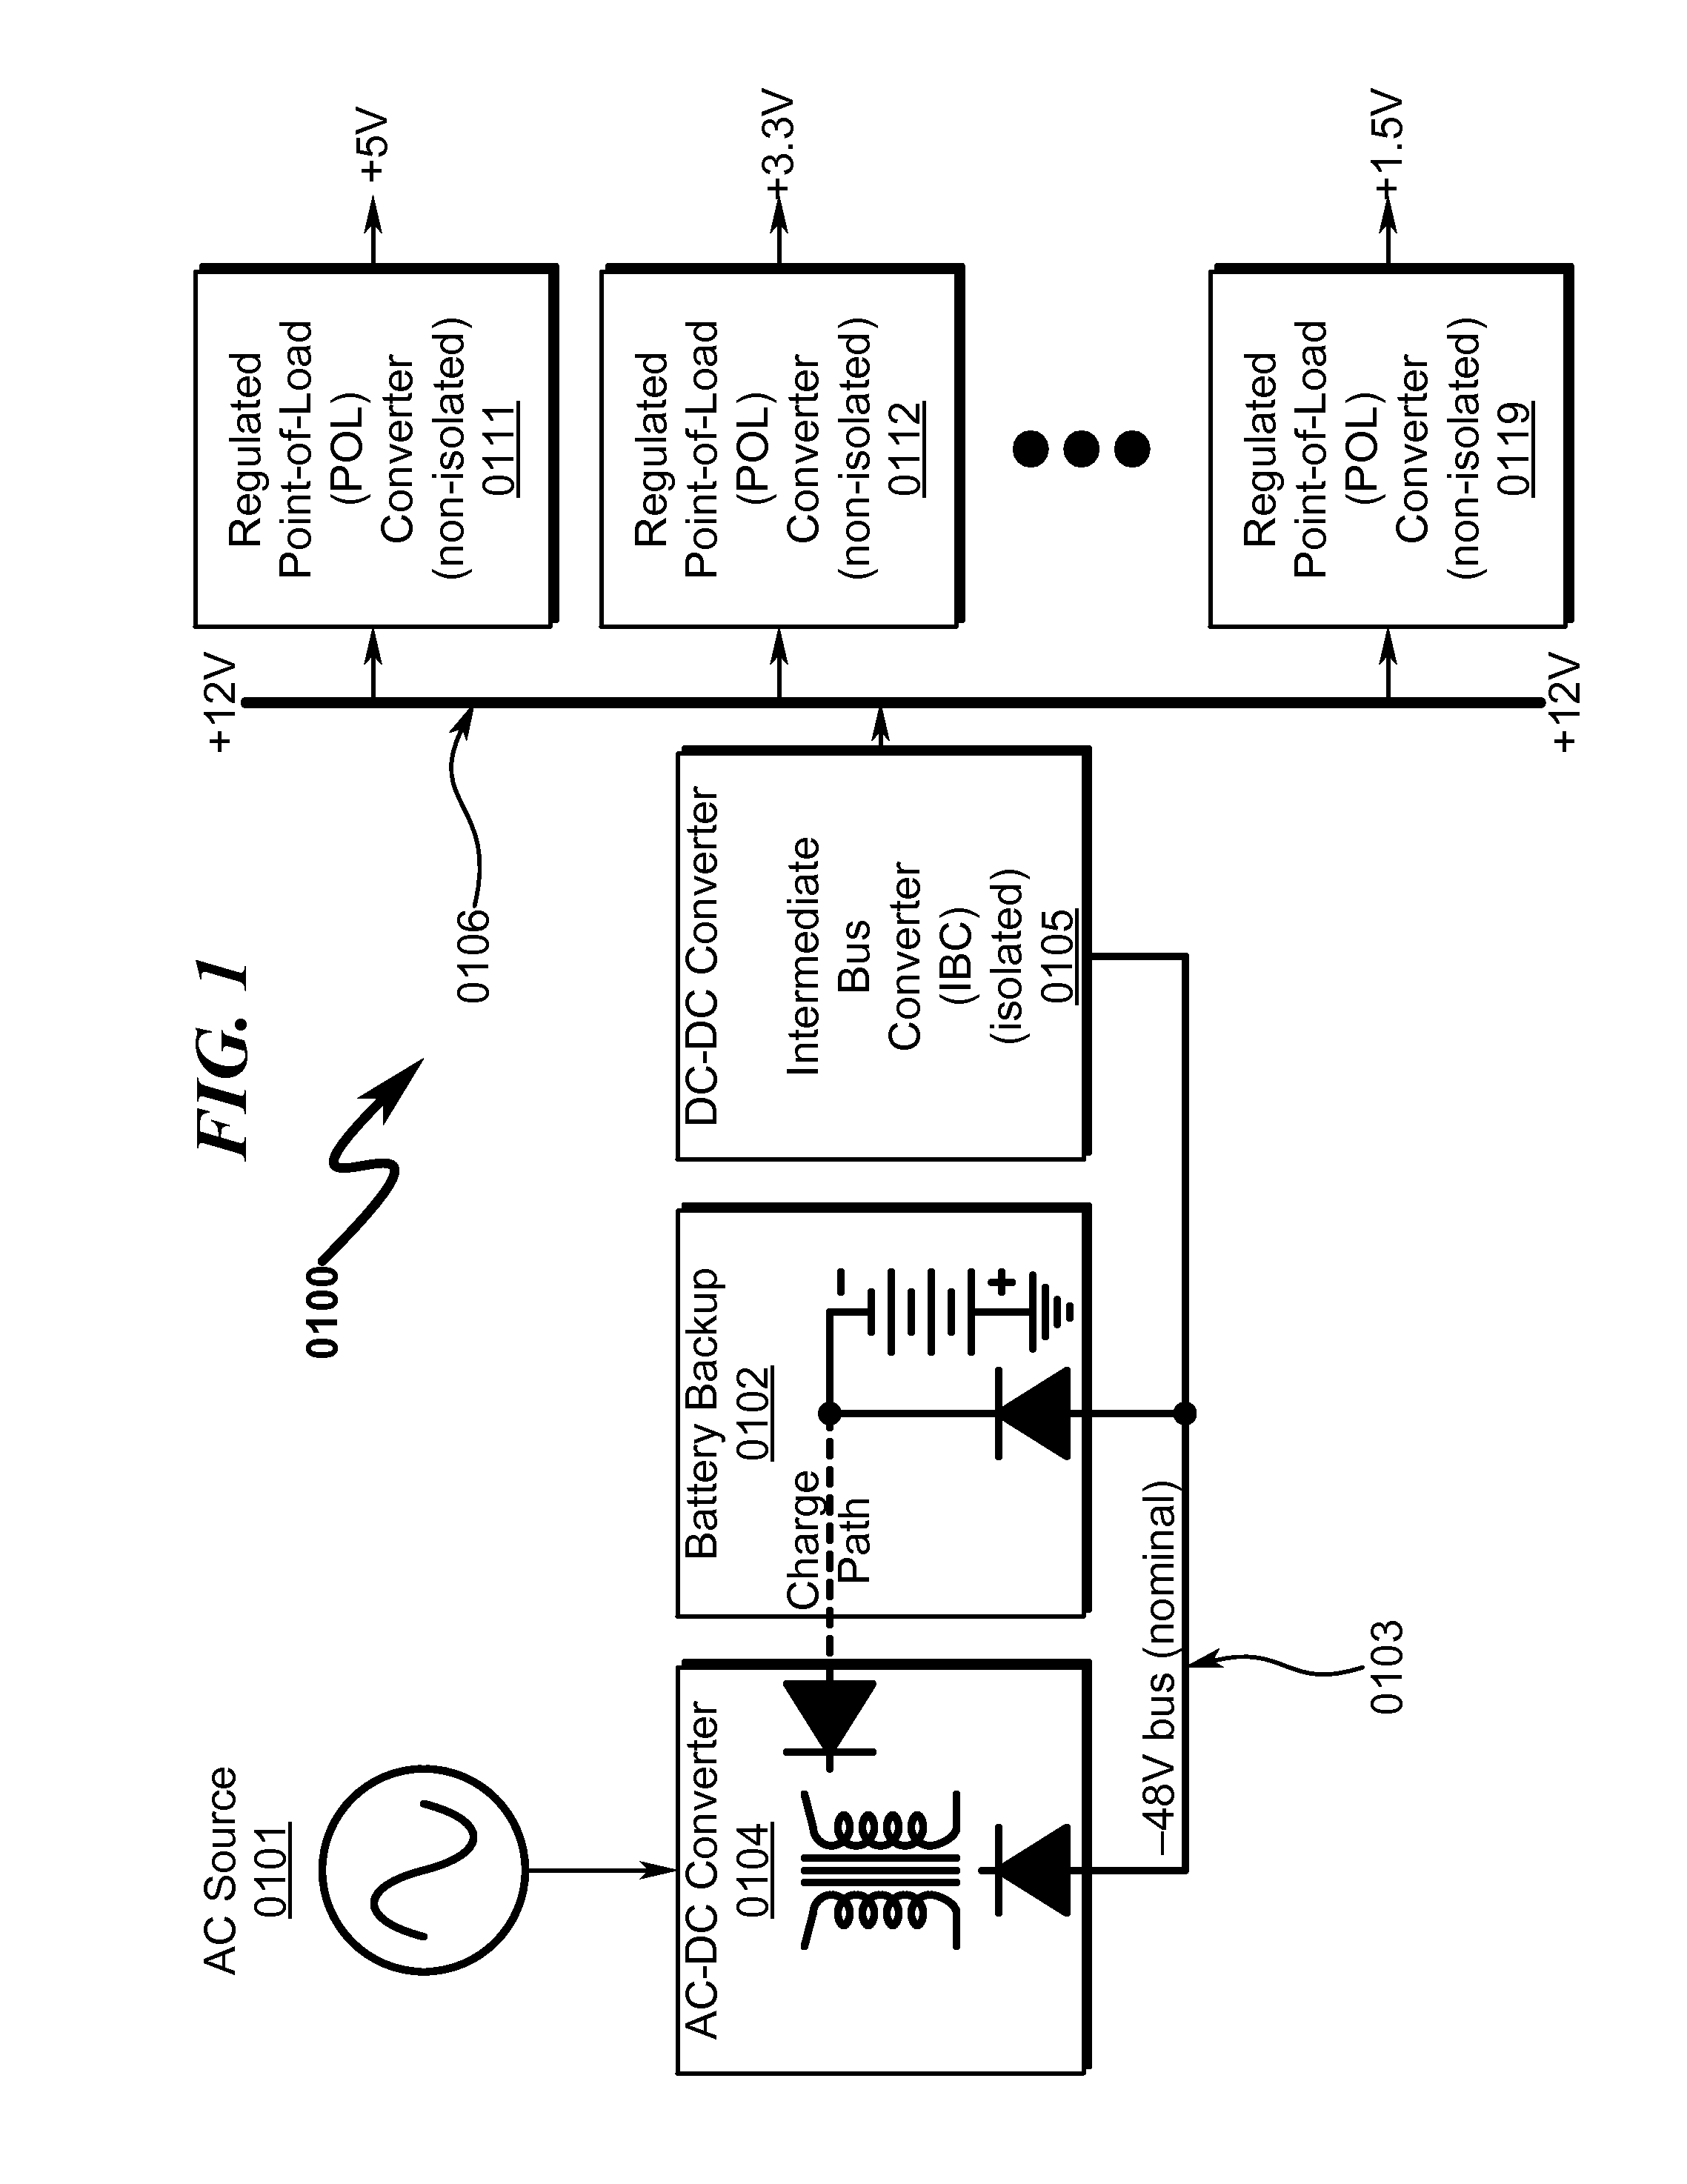 Multi-level voltage regulator system and method